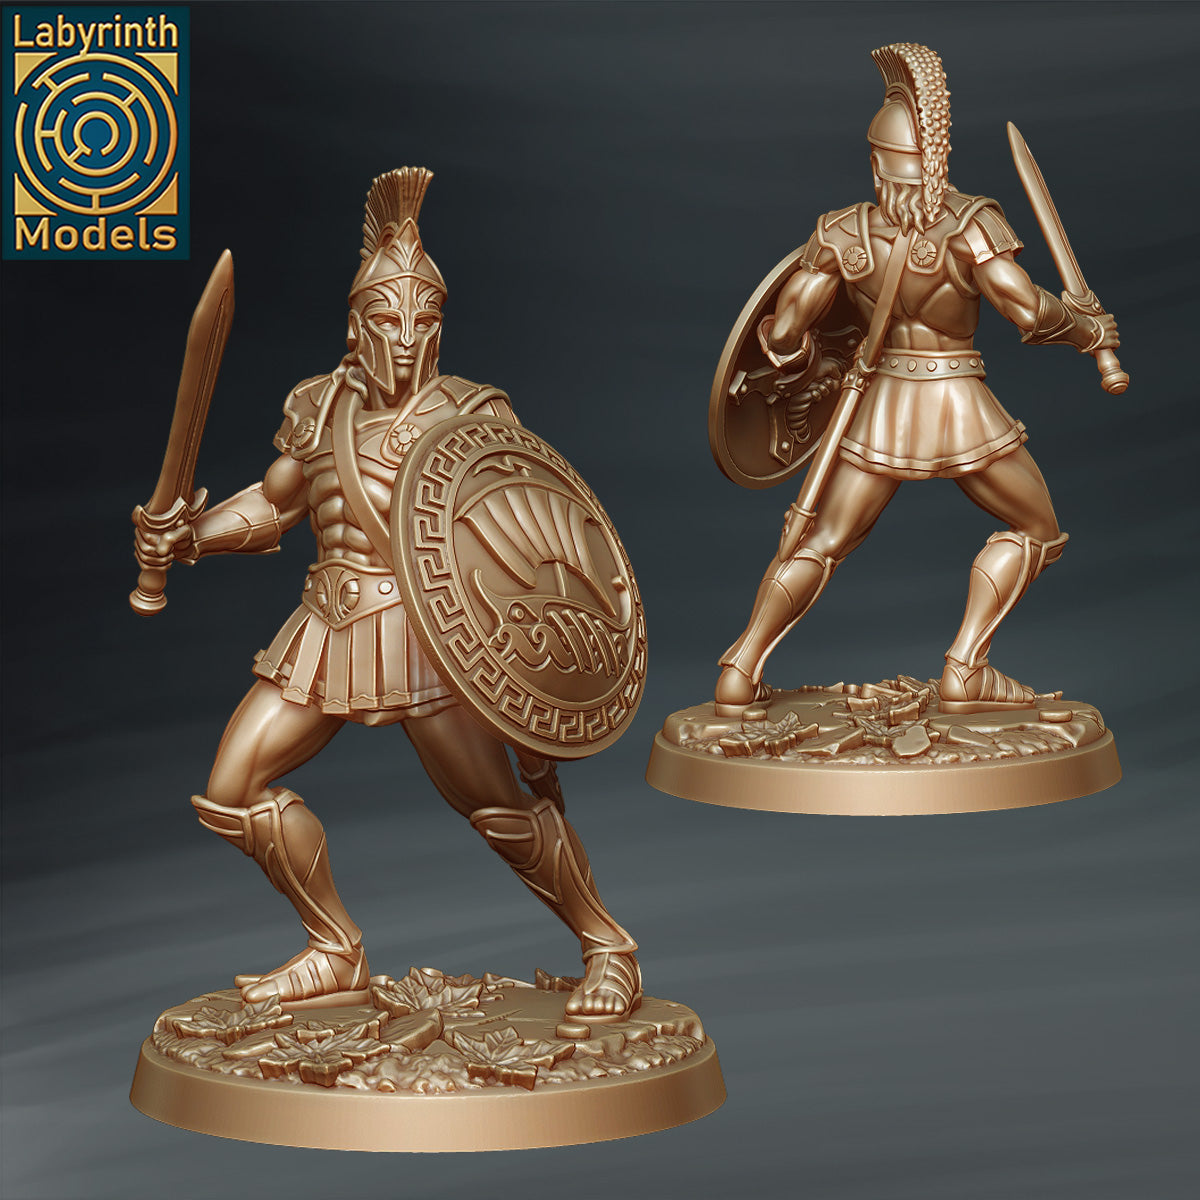 Argonauts by Labyrinth Models.